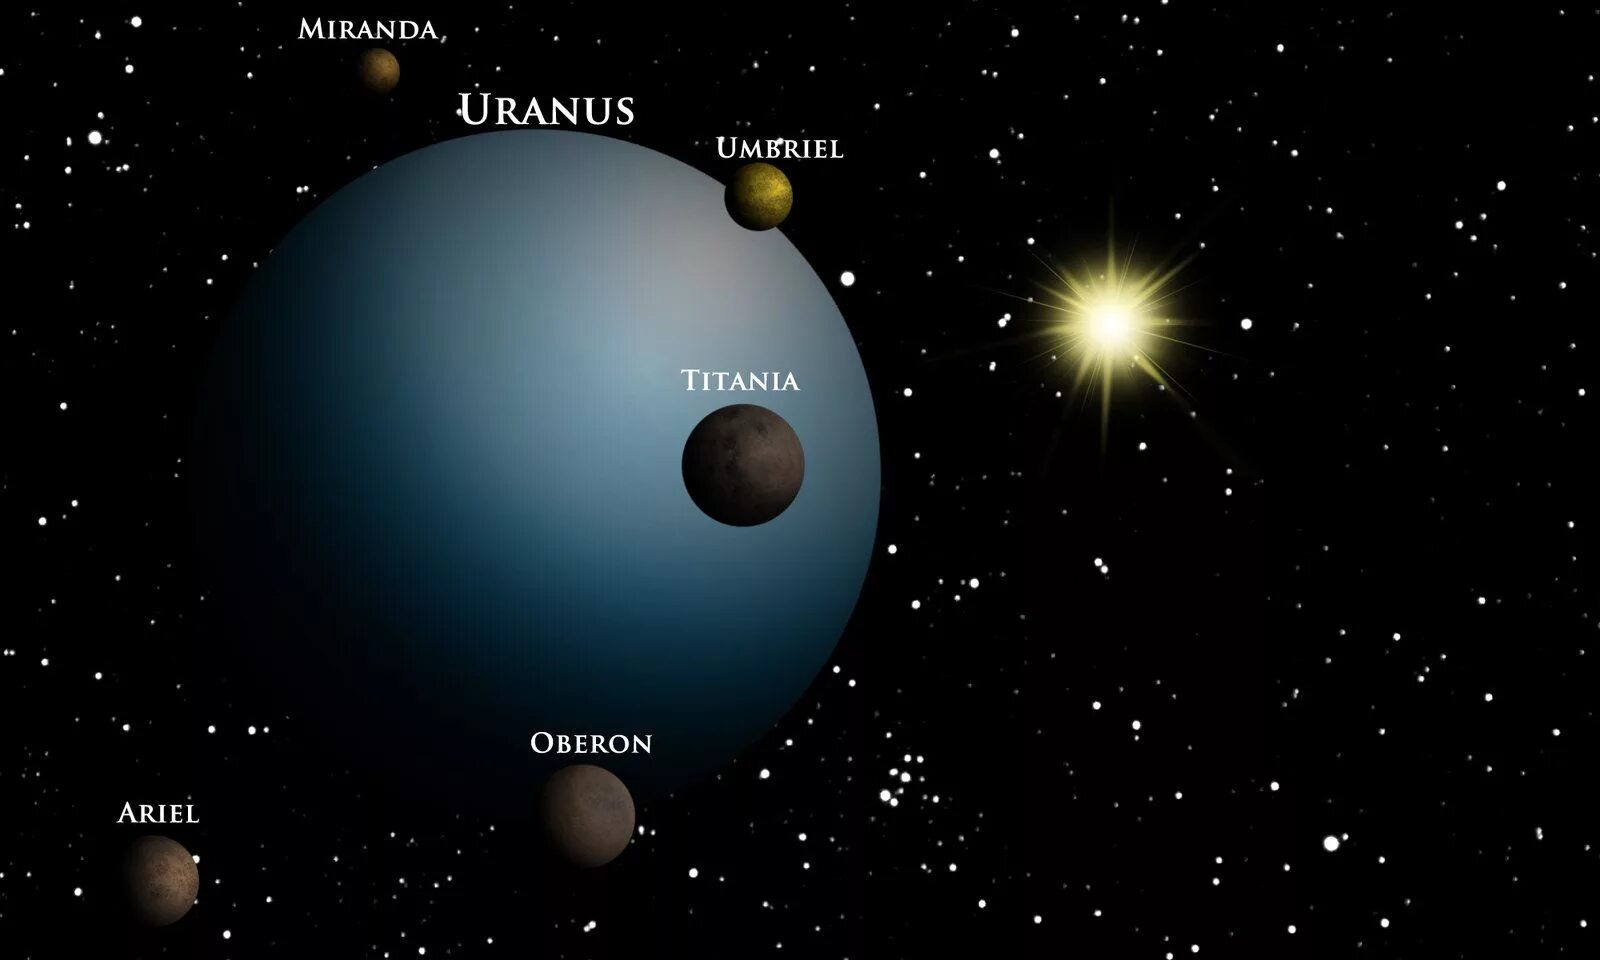 4 спутника урана. Спутники урана Титания, Оберон, Умбриэль, Ариэль и Миранда.. Уран Планета спутники. Оберон и Титания Спутник урана. Спутники планет Уран.